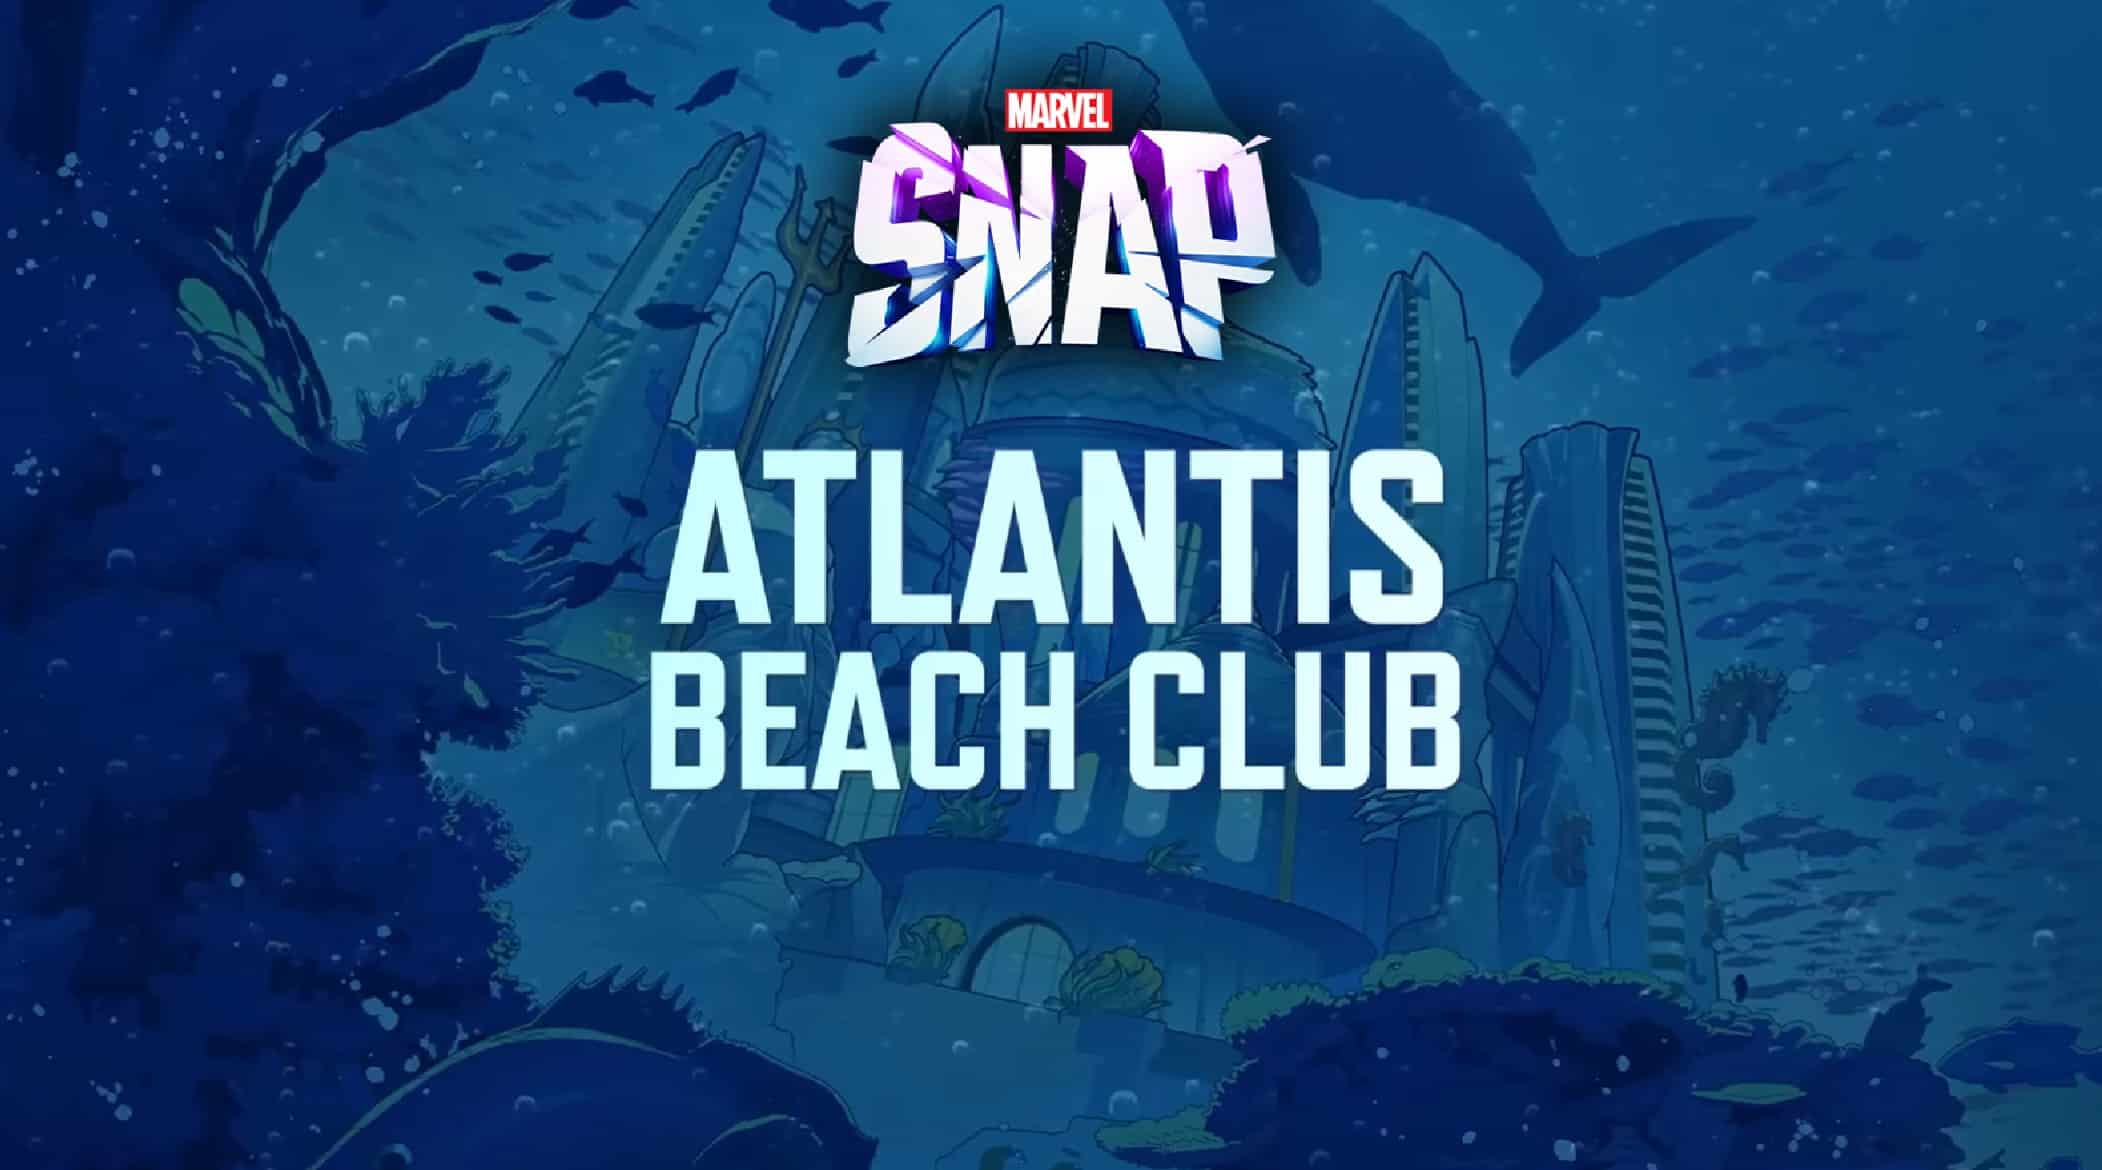 Marvel Snap Atlantis Beach Club artelana